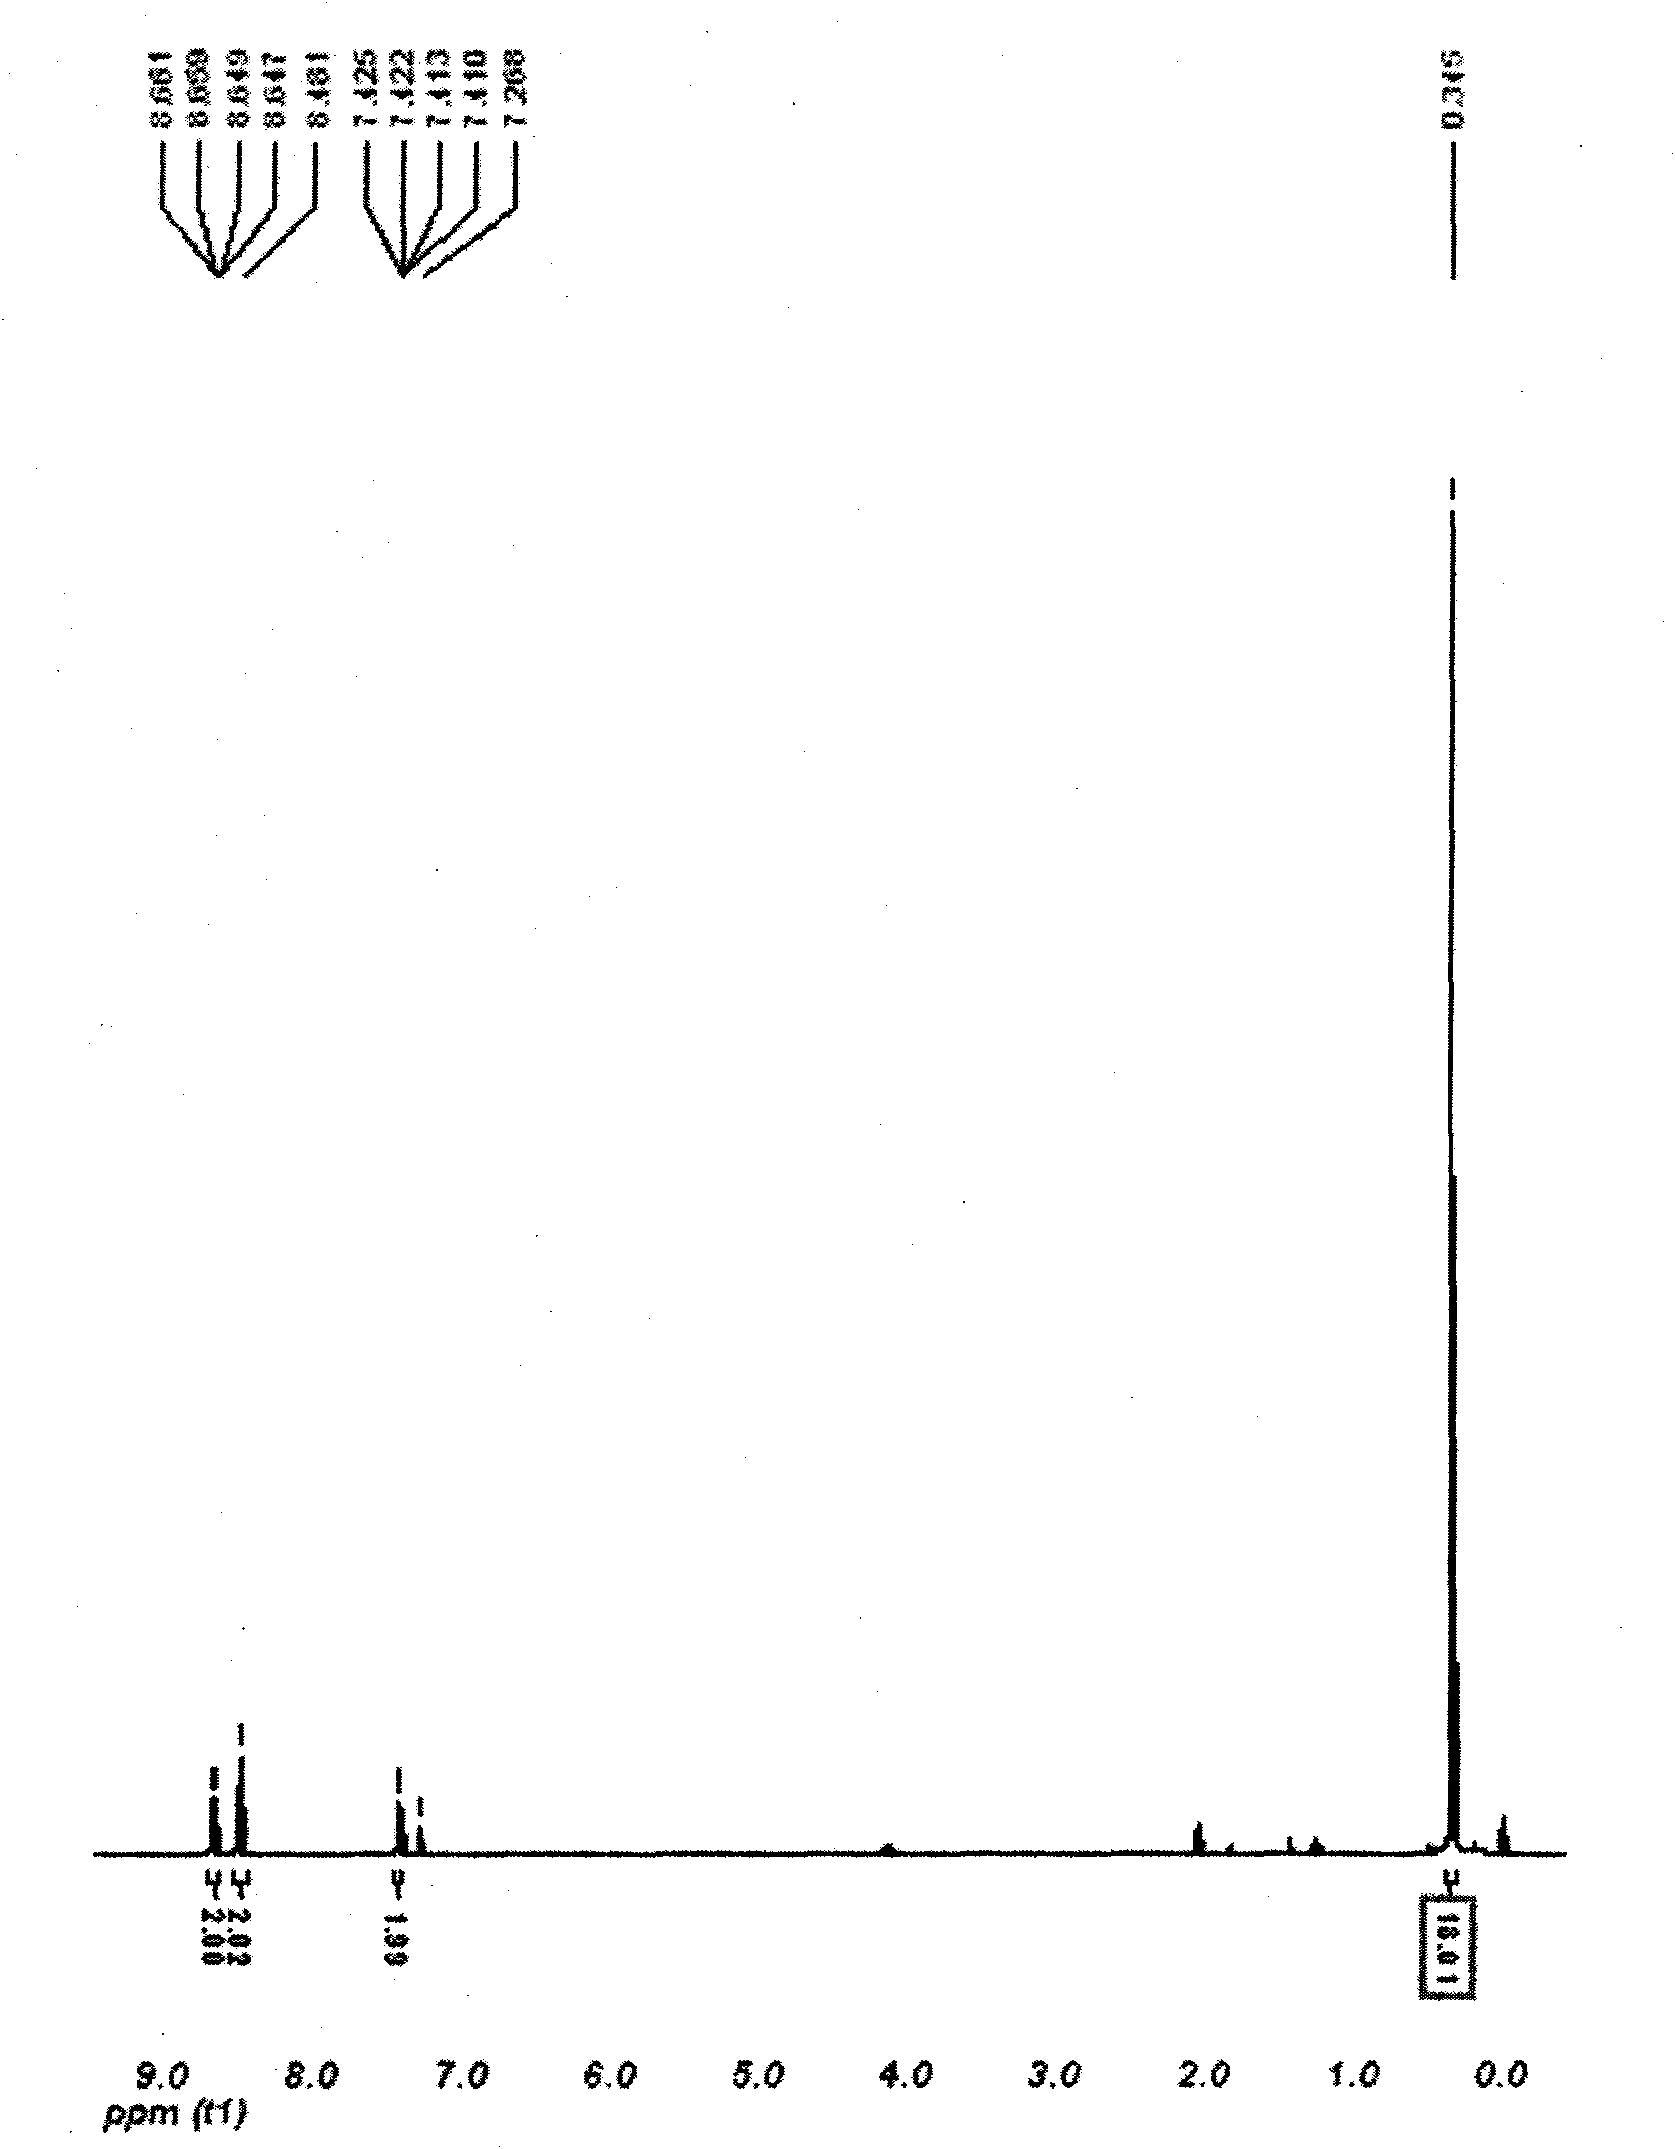 Synthesis method of novel compound 4,4'-bis(trimethylsilyl)-2,2'-bipyridyl